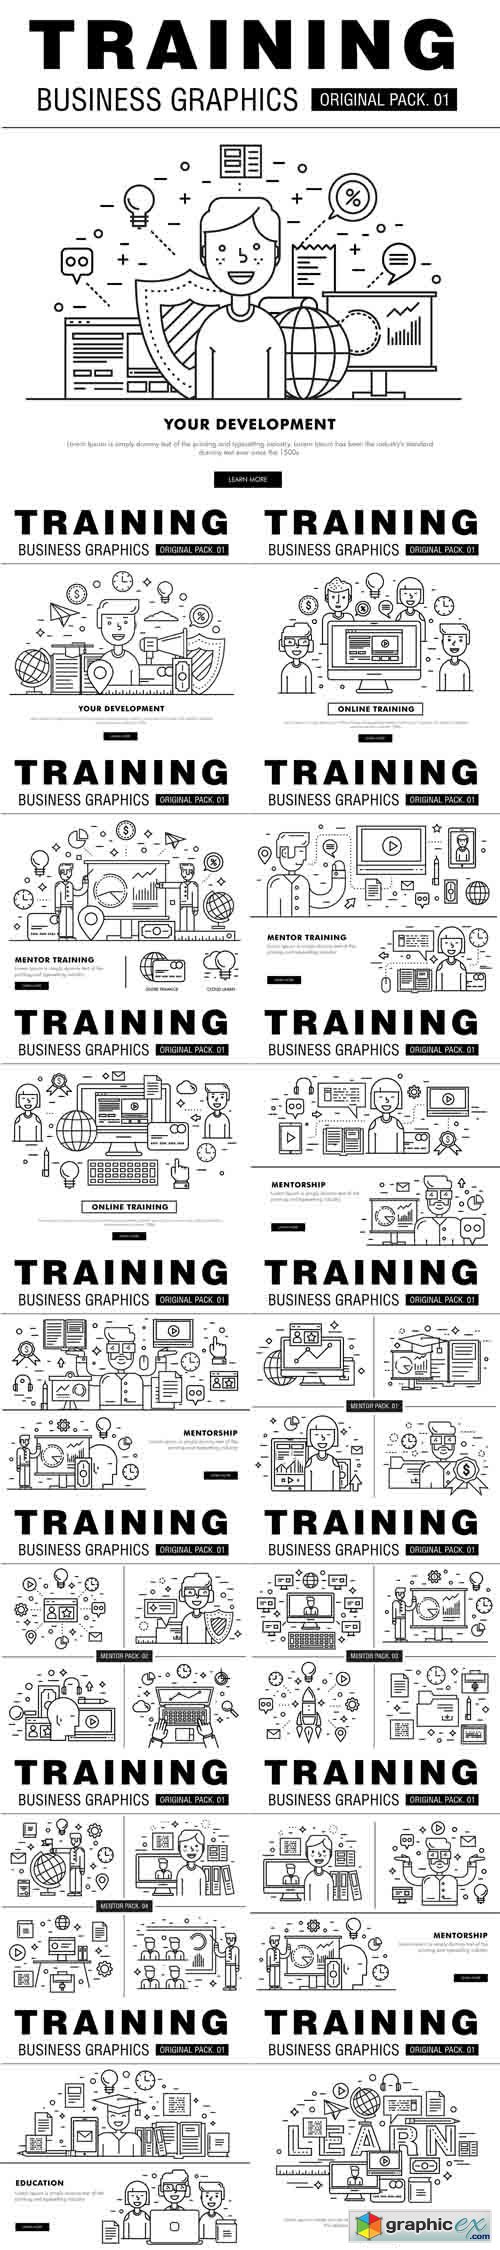 Modern Business Training Pack